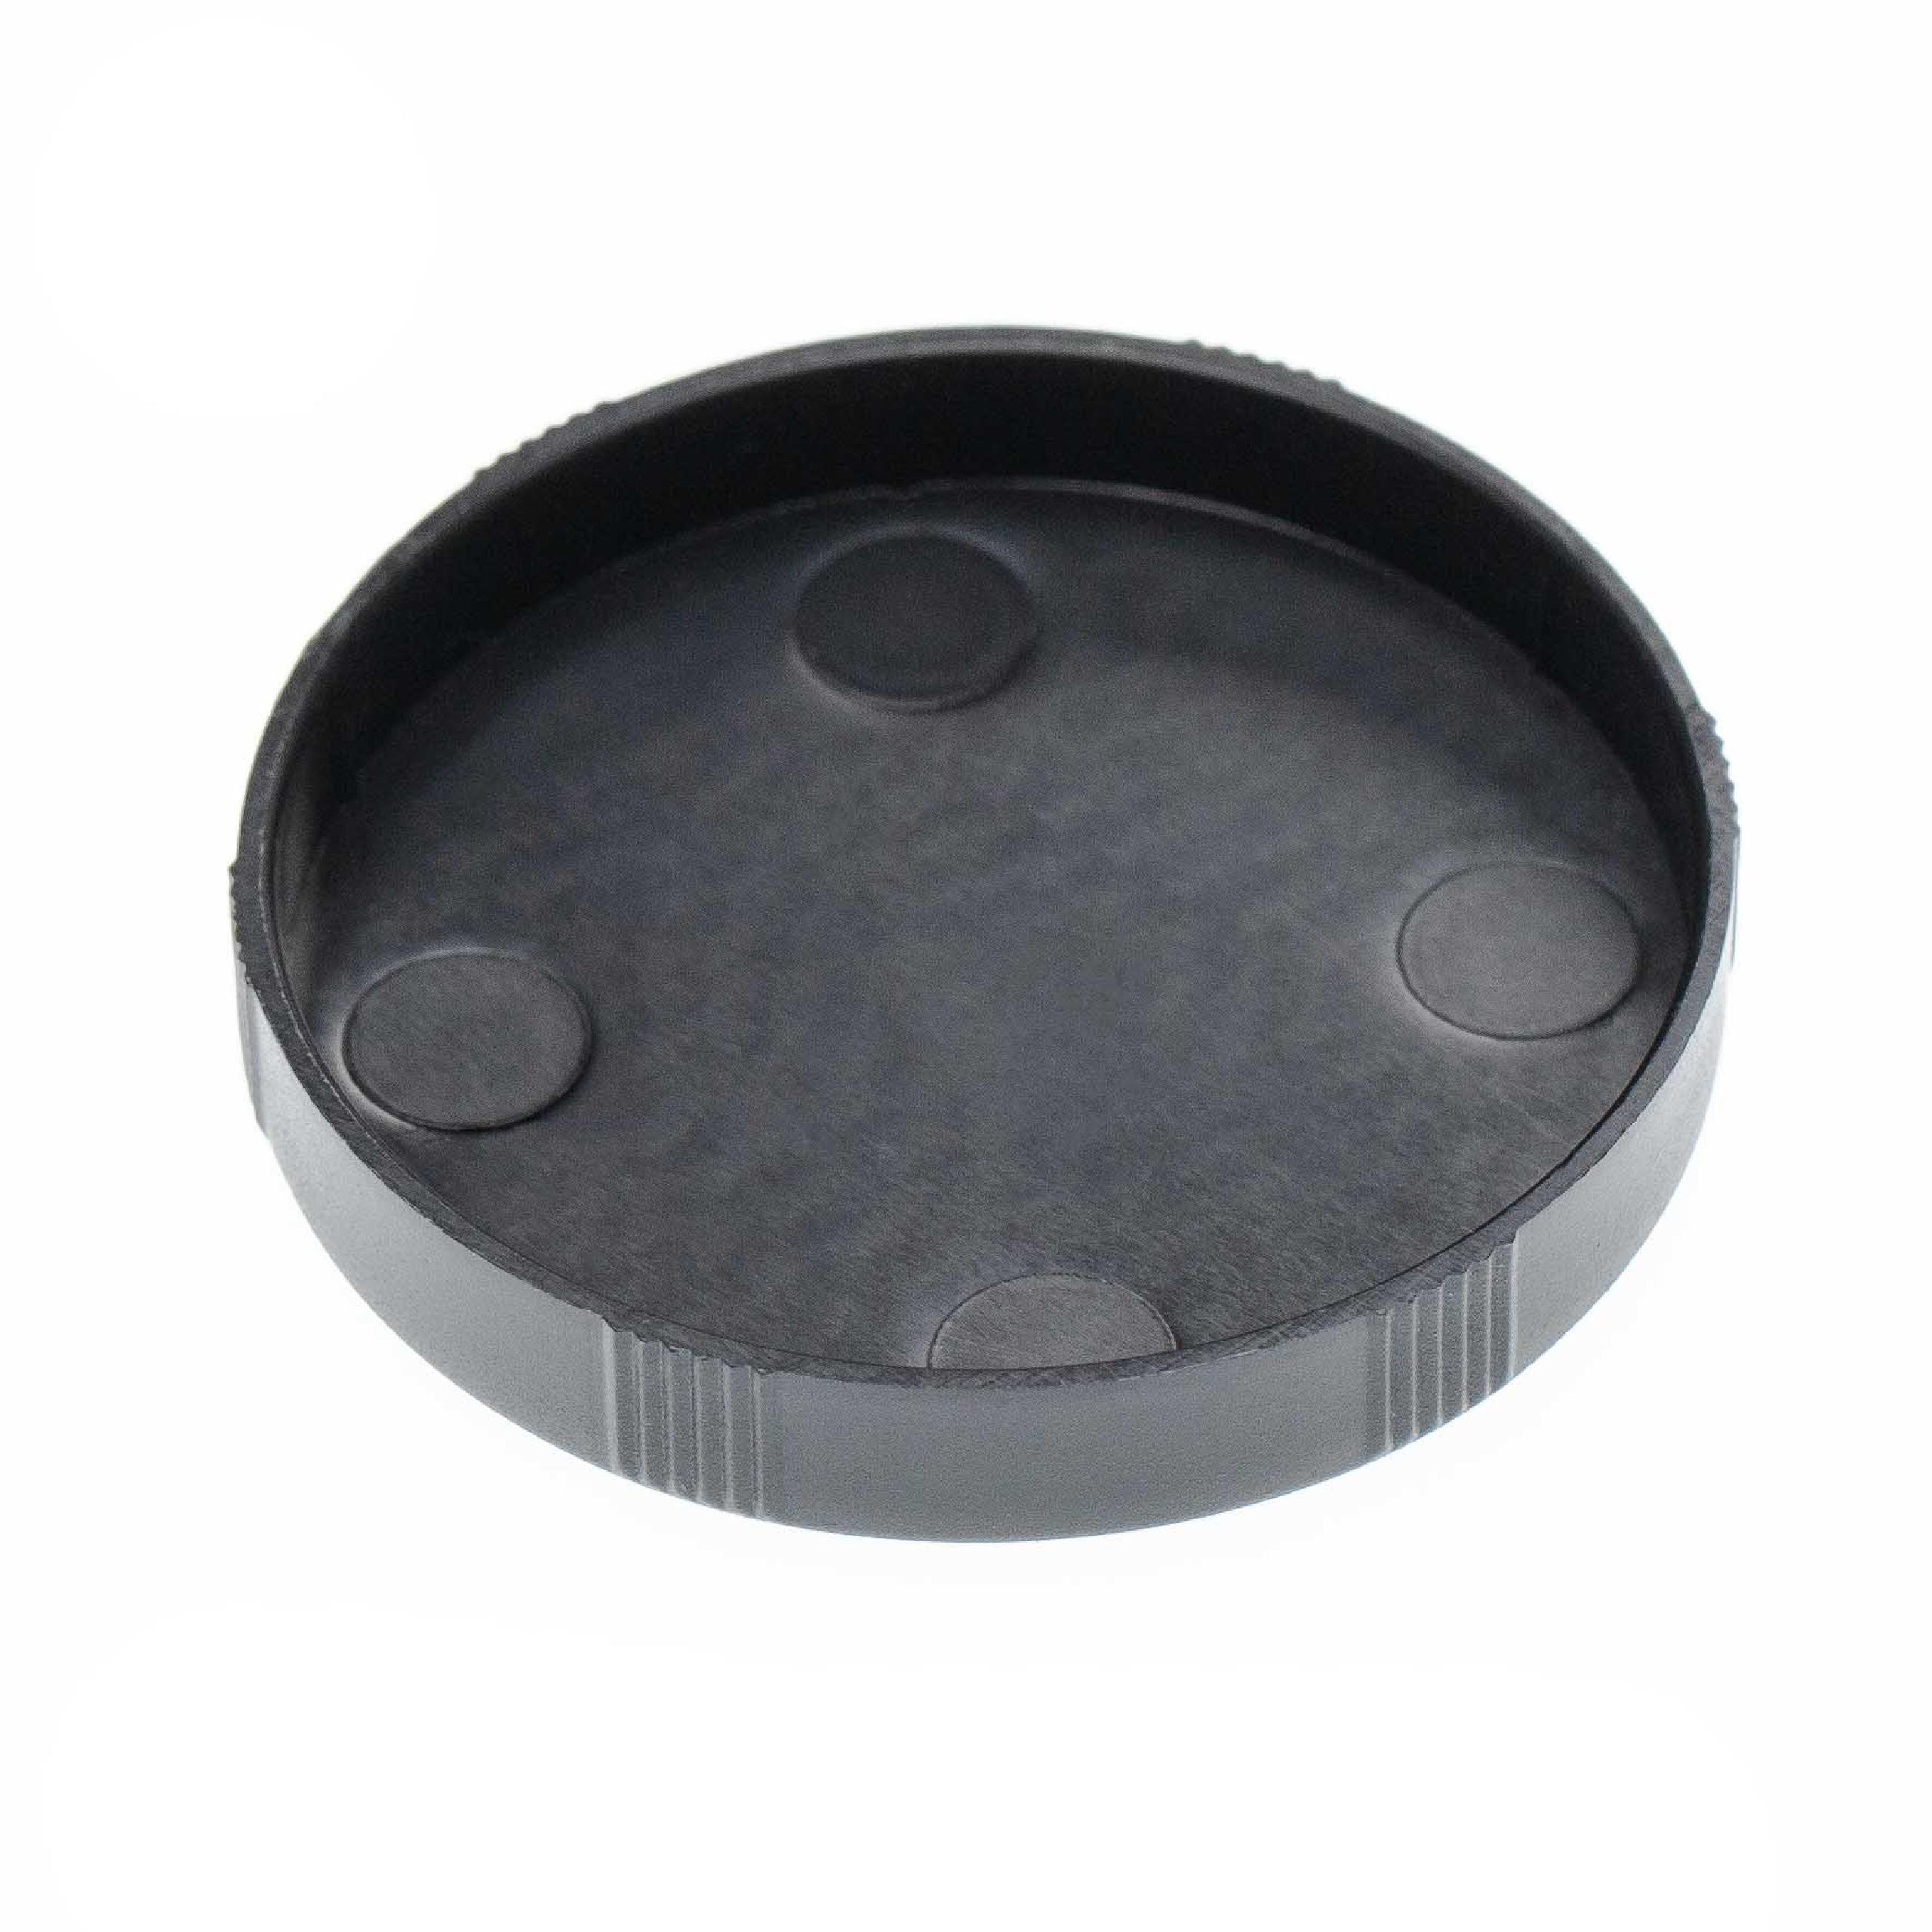 2x Lens Cap suitable for Binocular Lenses with 45 mm Diameter - Black, Detachable